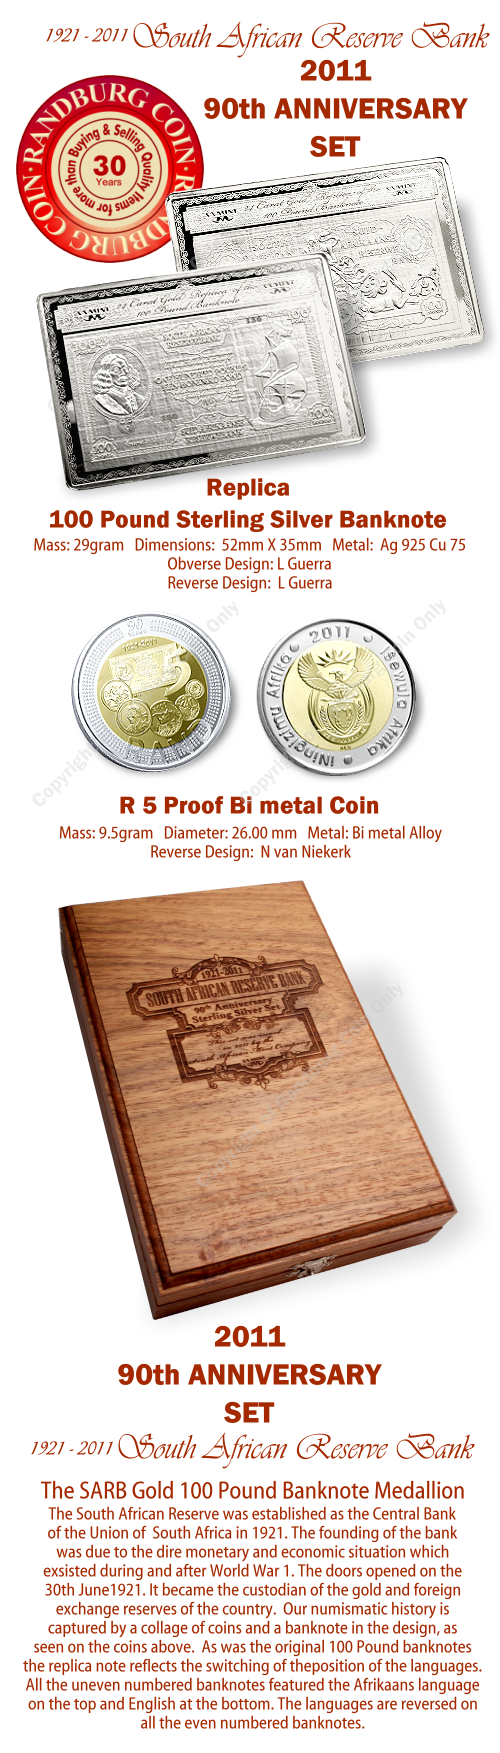 2011_Proof_90th_Anniversary_Set_R5_coin_29gram_Silver_SARB_Medallion_coins